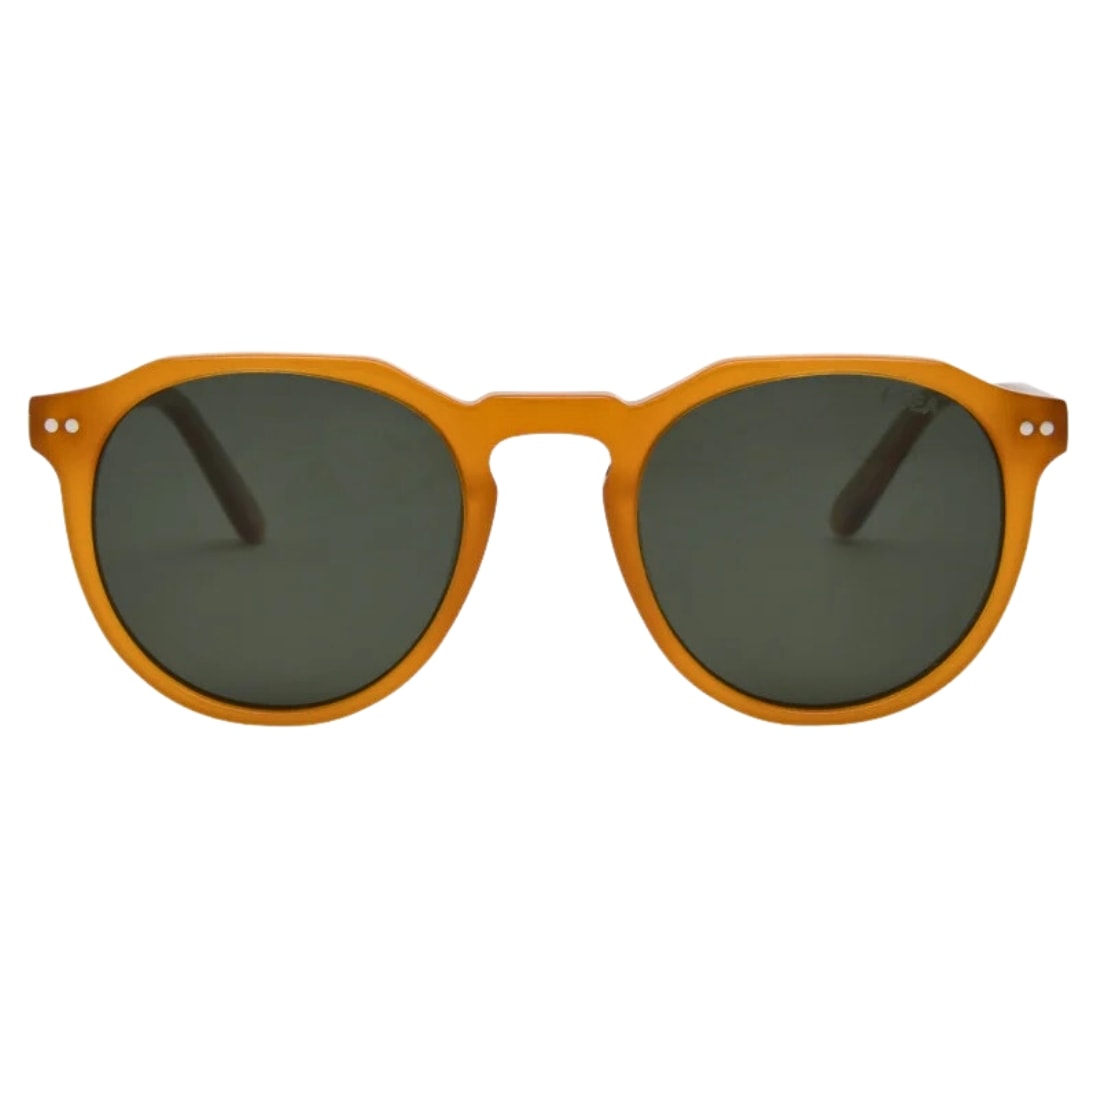 I-Sea Watty Round Polarised Sunglasses - Sunshine/Green Polarized Lens - Round Sunglasses by I-Sea